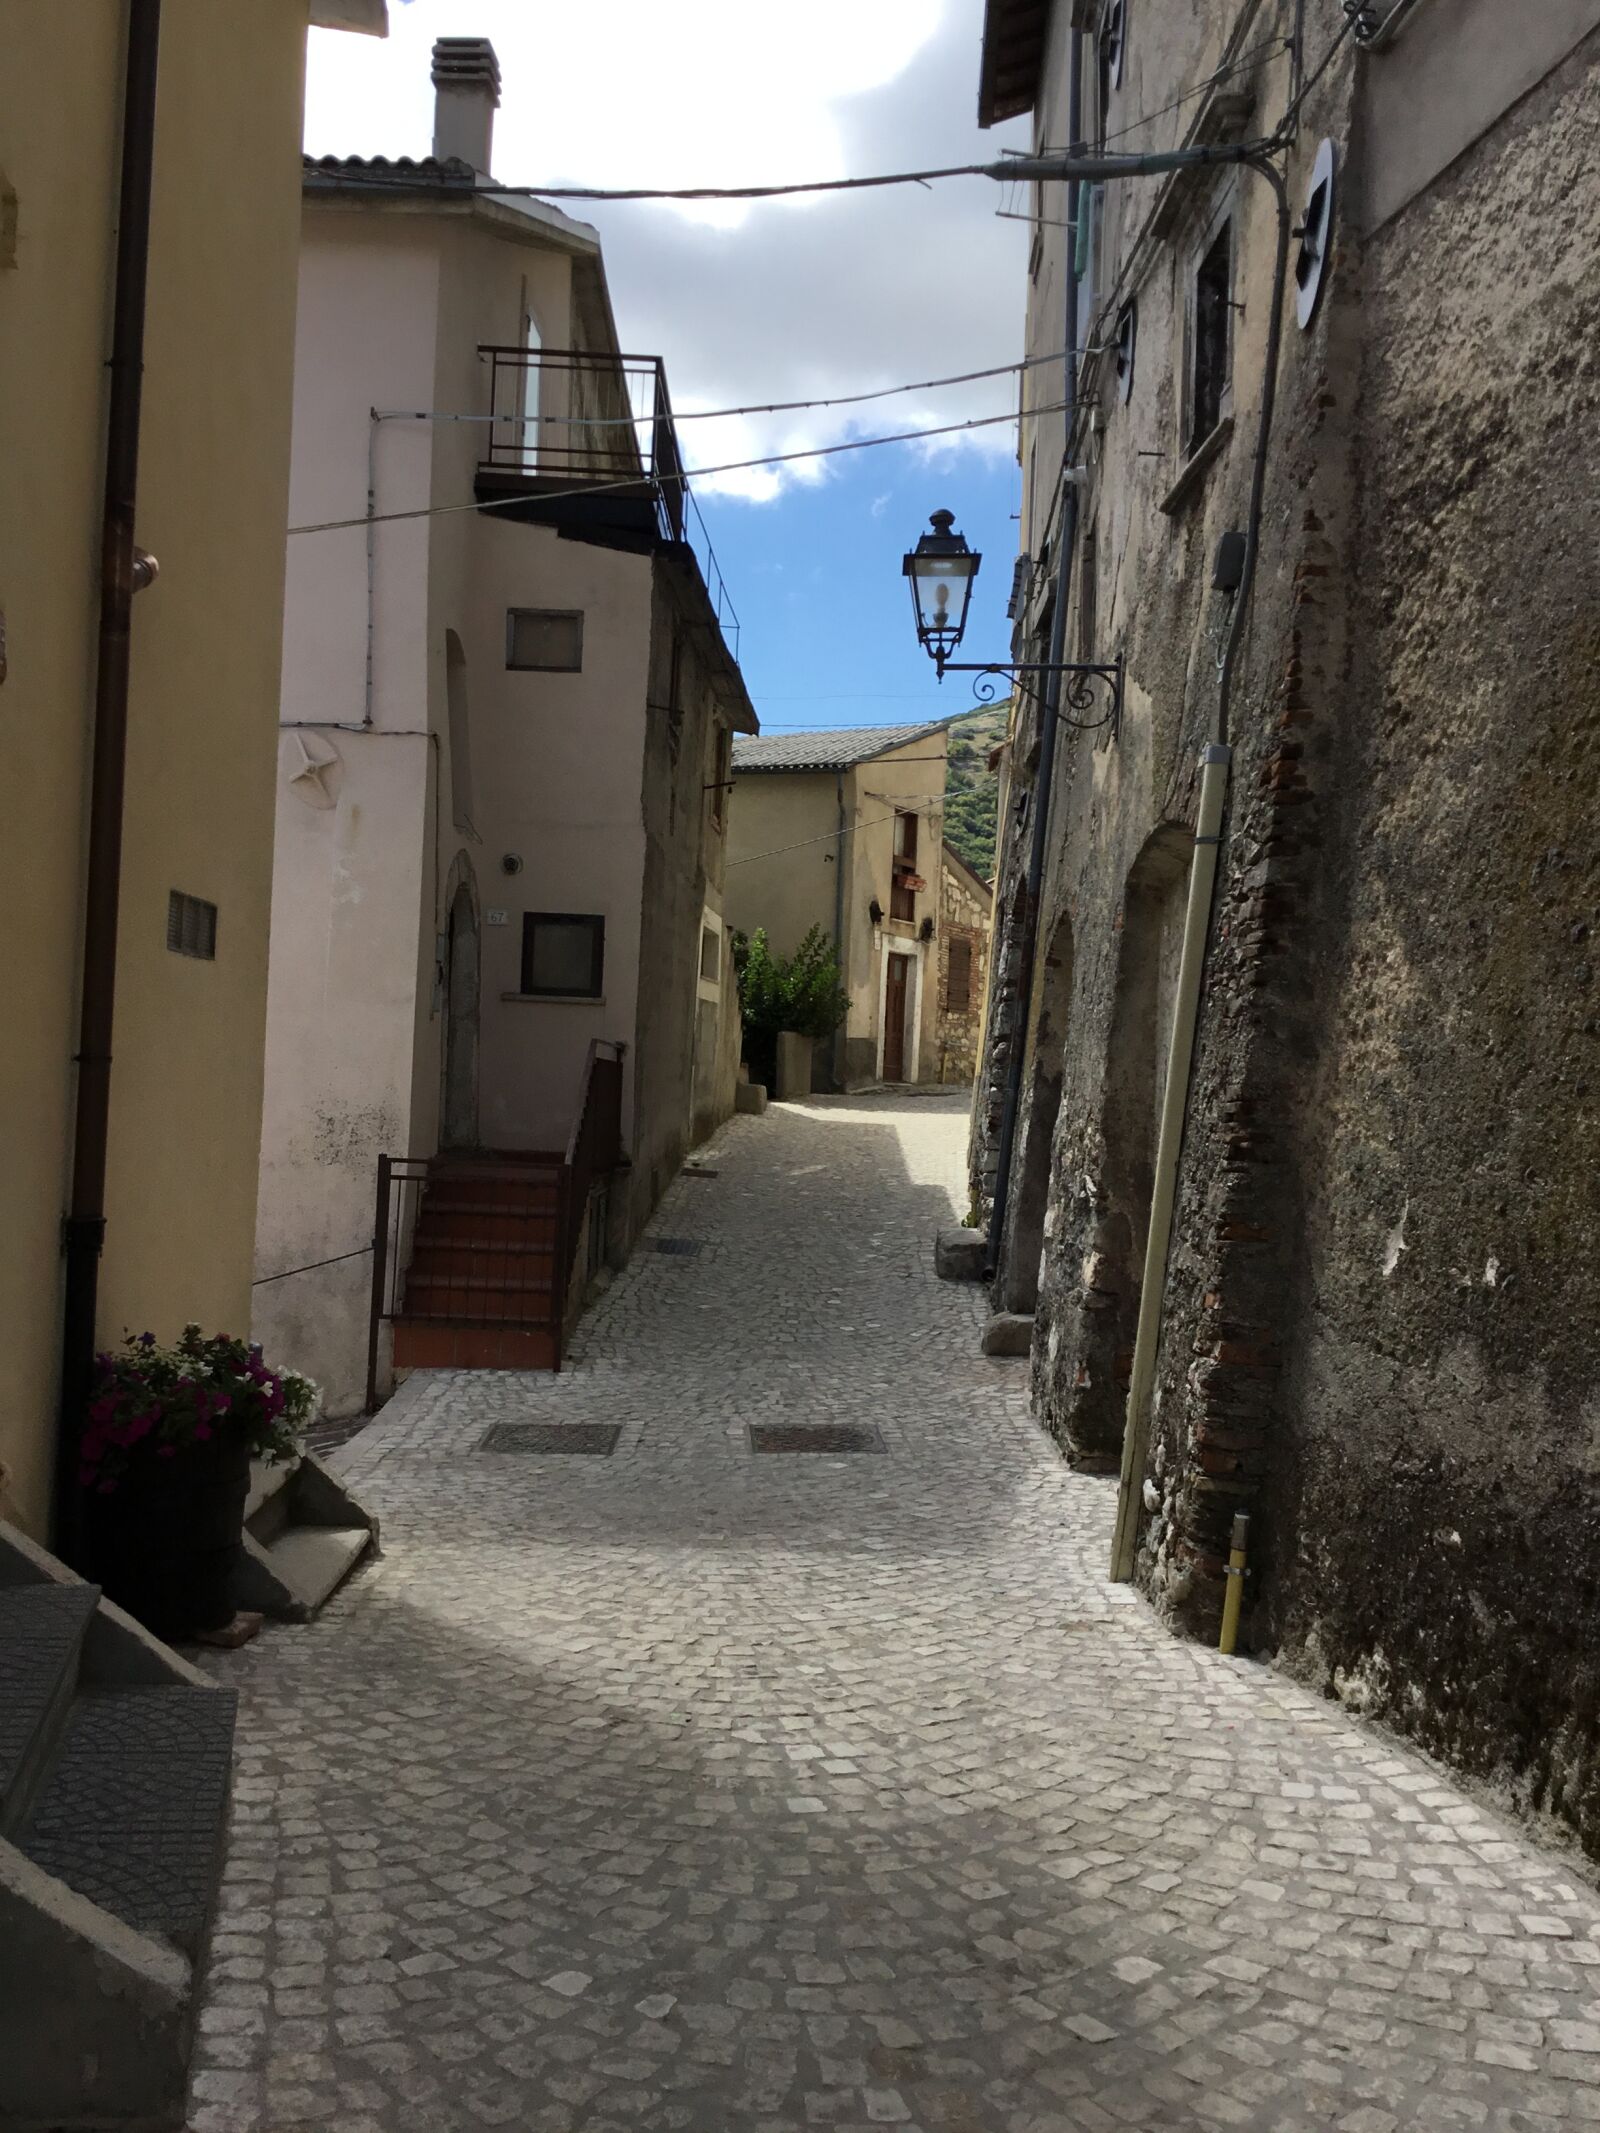 iPad Pro back camera 3.3mm f/2.4 sample photo. Villages, italians, historical photography